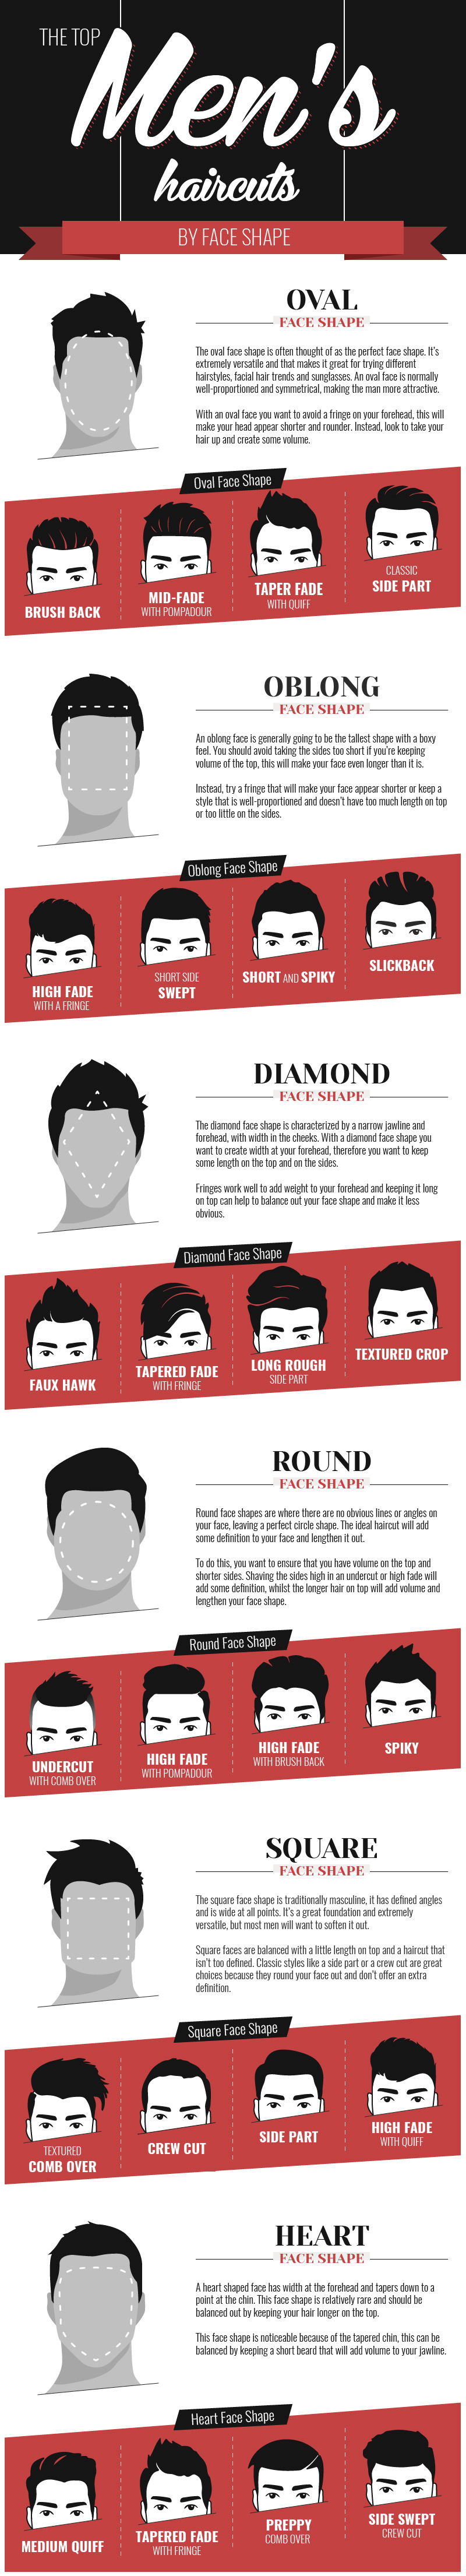 Diamond face shape hairstyle men | Hairstyles for diamond face shape | Diamond  face hairstyle - YouTube